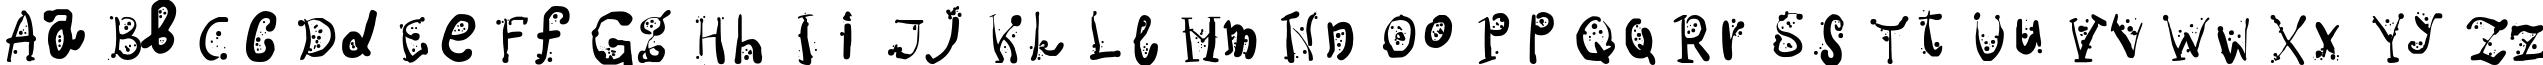 Пример написания английского алфавита шрифтом Ospa